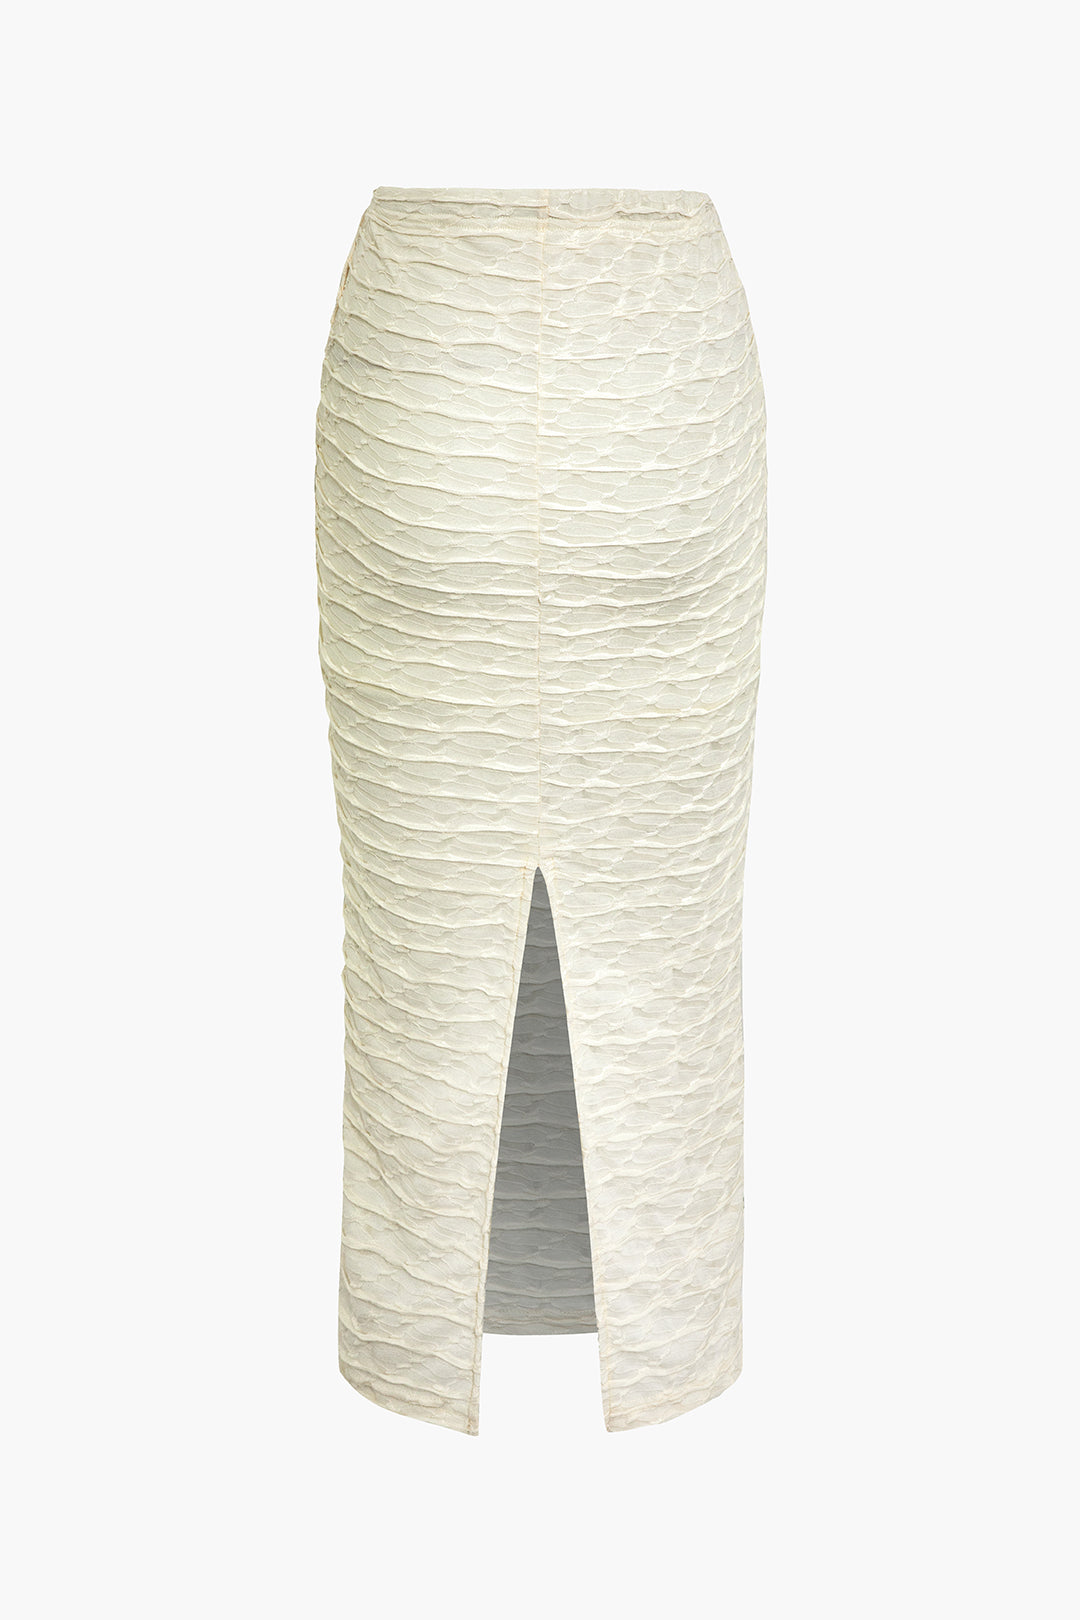 Textured Halter Top And Twist Midi Skirt Set